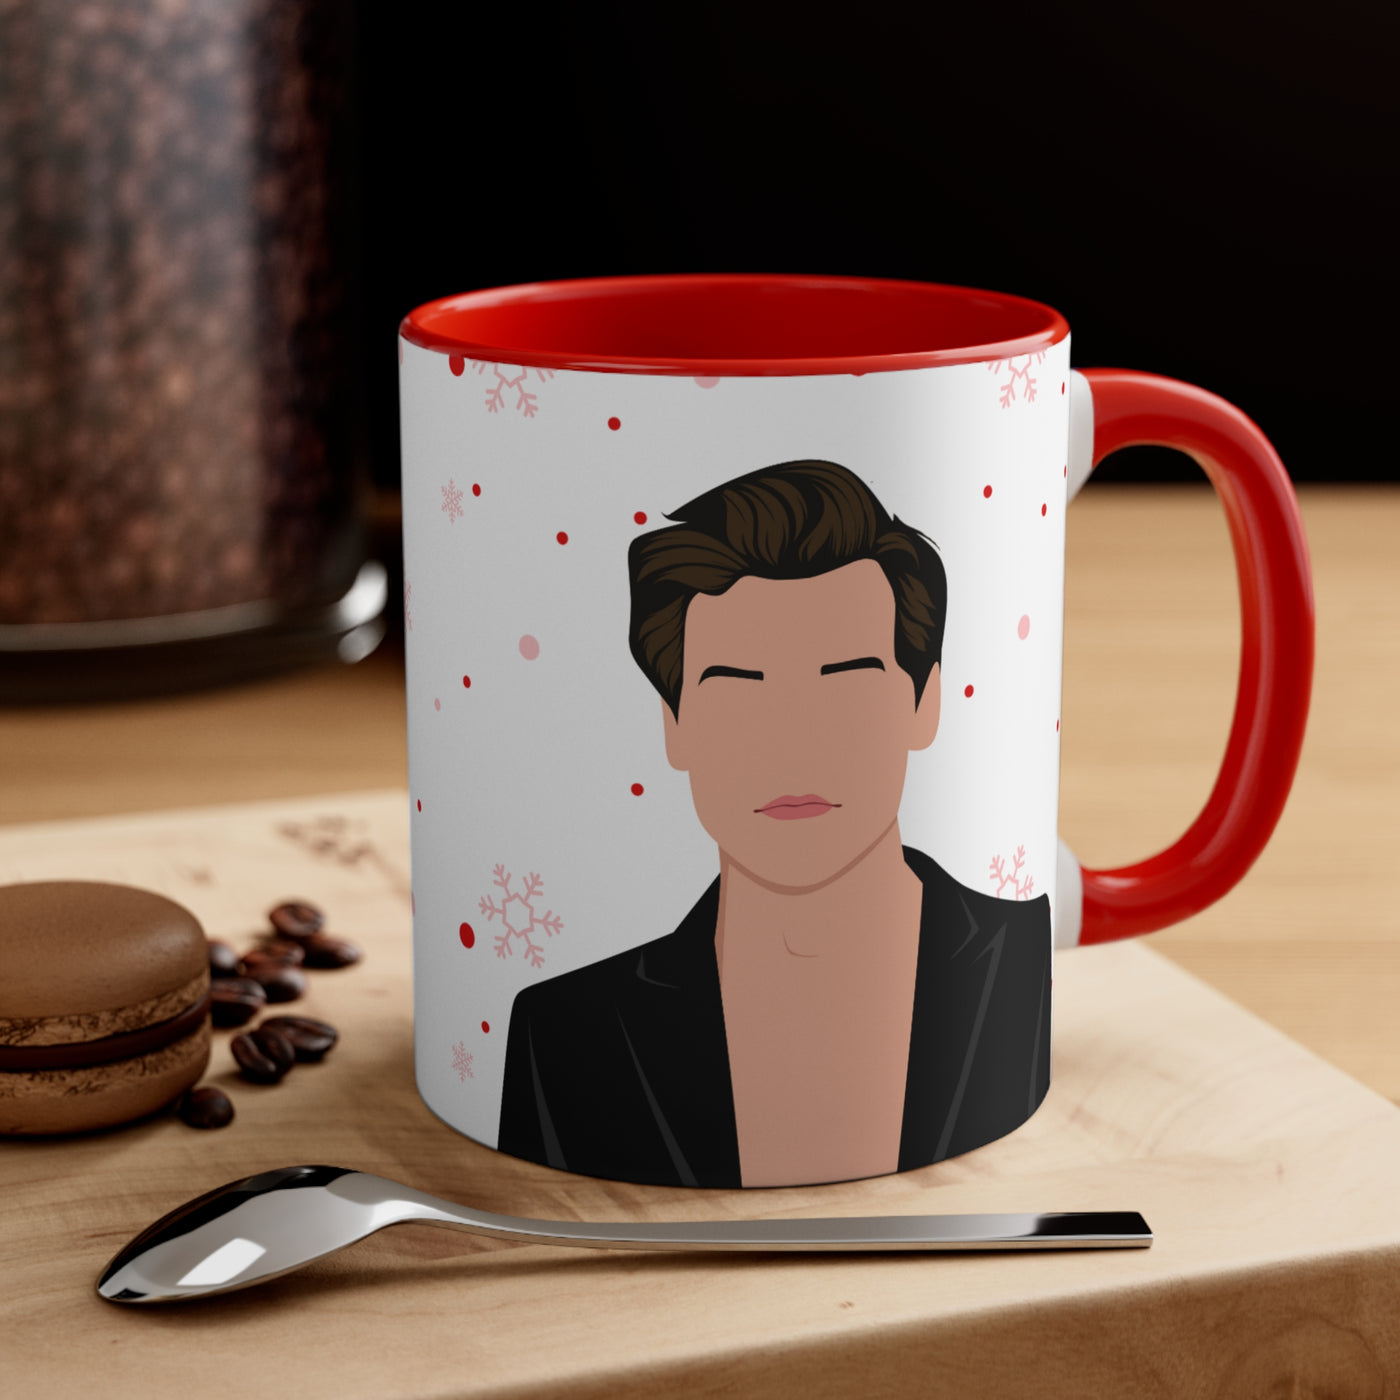 The Harry - Holly Harry Holiday Coffee Mug